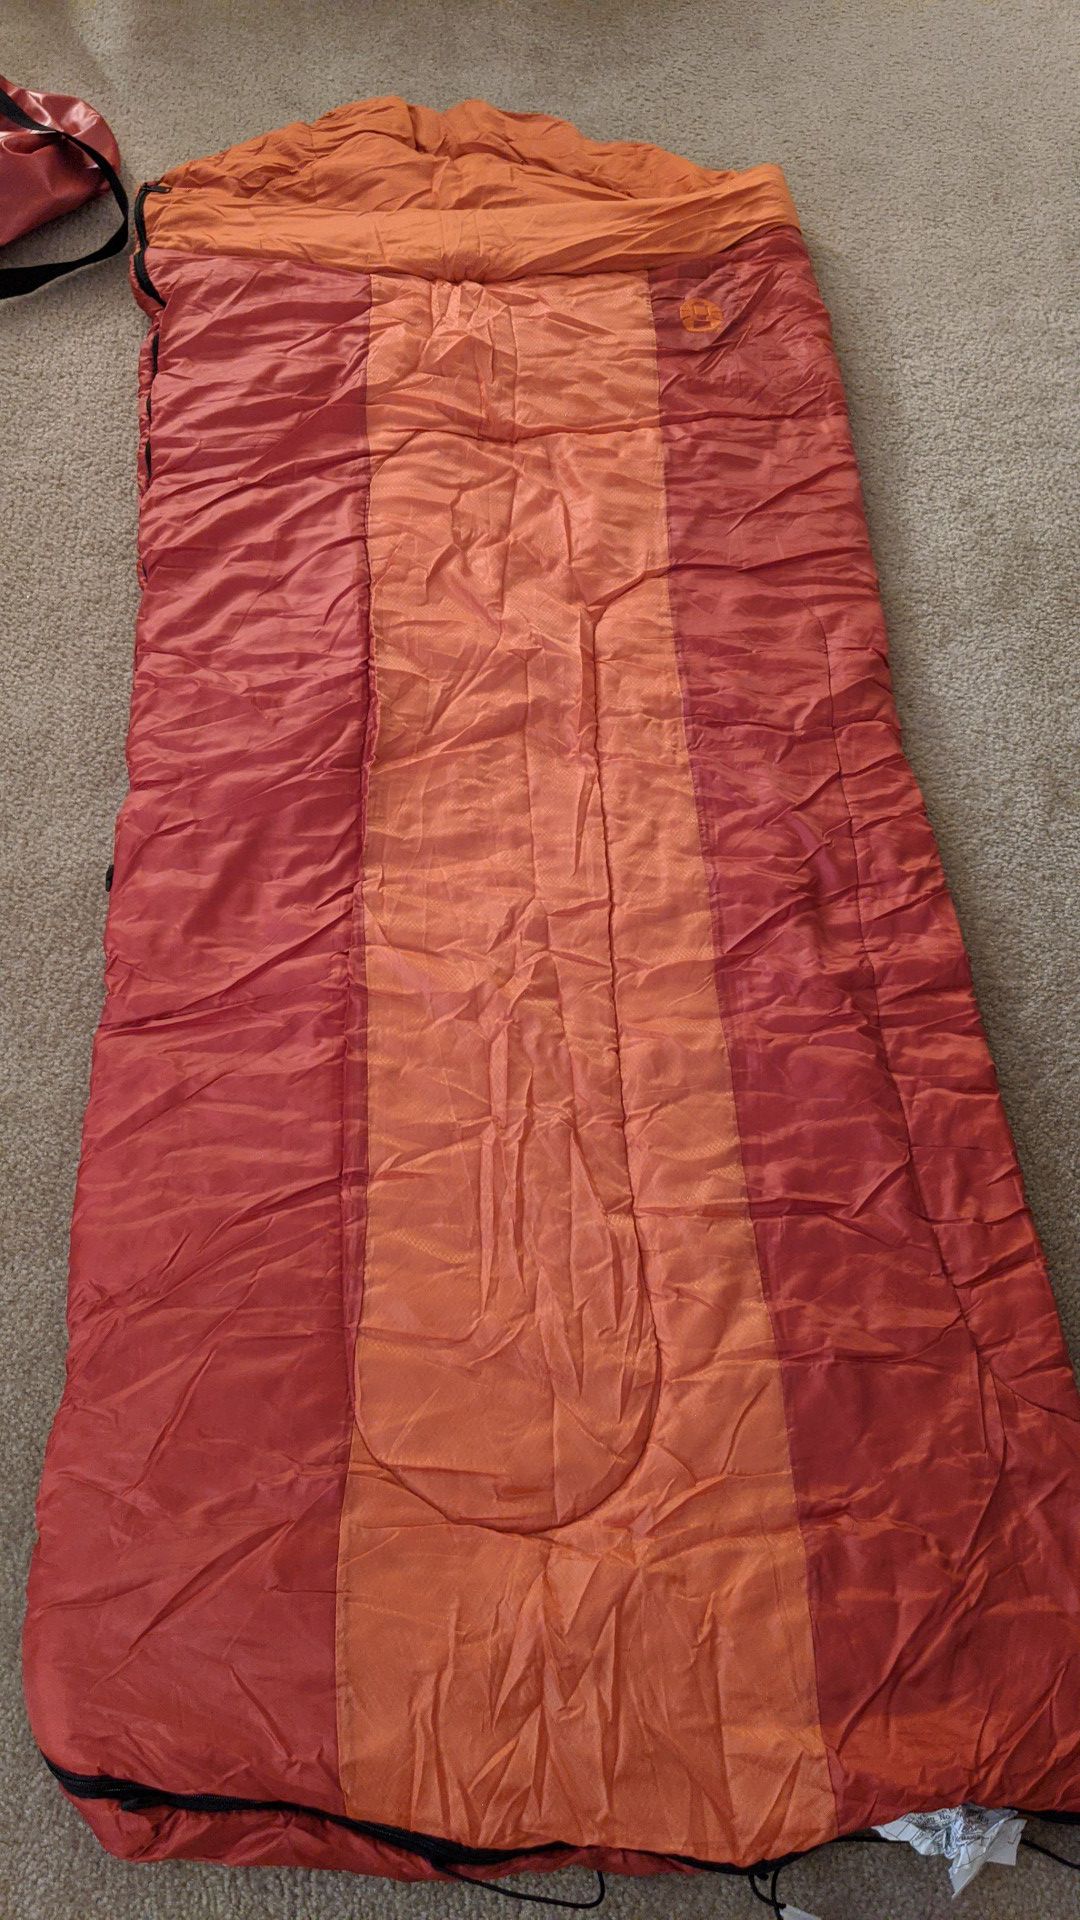 Coleman 40 degree sleeping bag